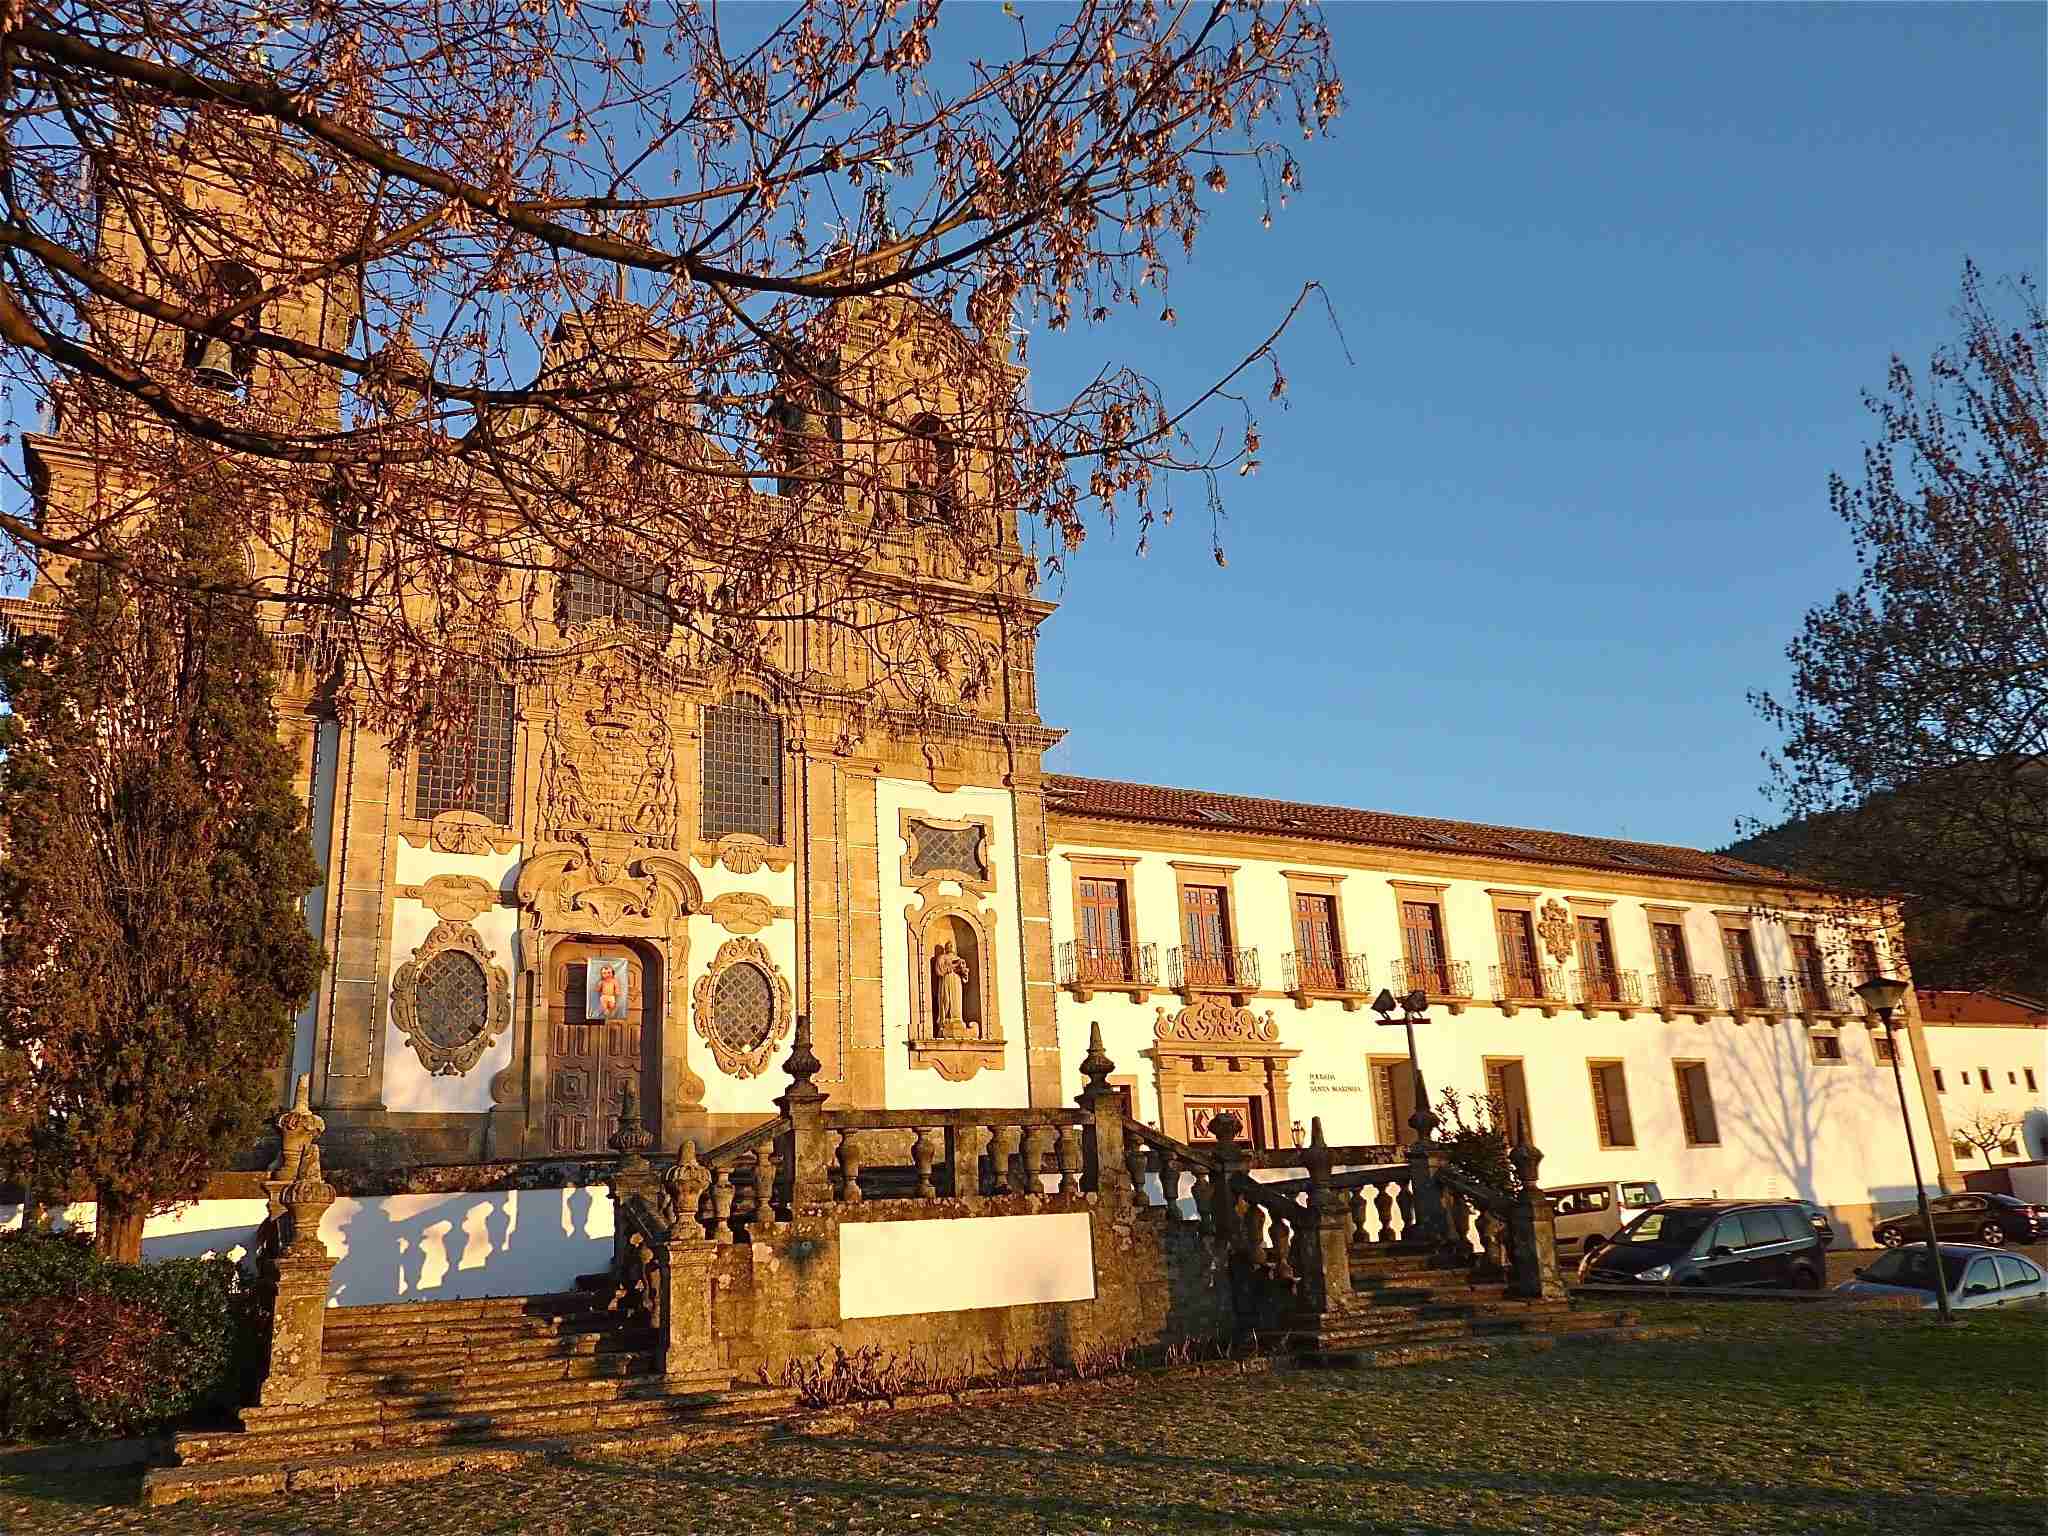 Pousada of Convento de Santa Marinha